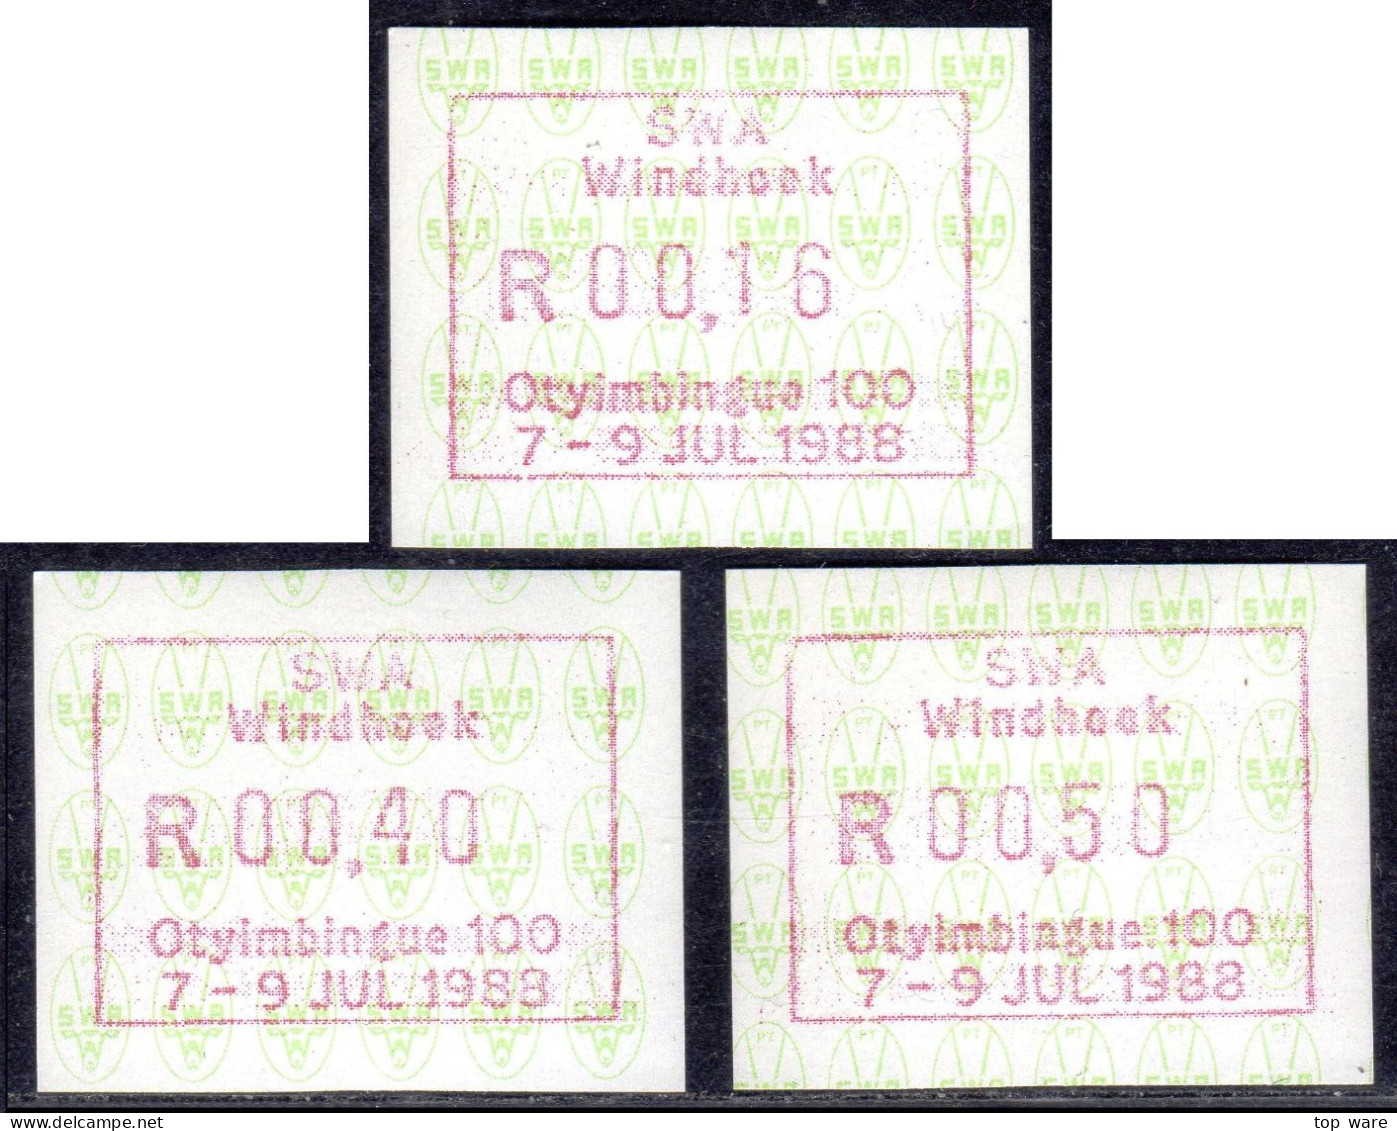 1988 SWA Namibia ATM 2 / Otyimbingue 100 / Windhoek / Set 16/40/50 ** Frama Automatenmarken Etiquetas Automatici RSA - Automaatzegels [ATM]